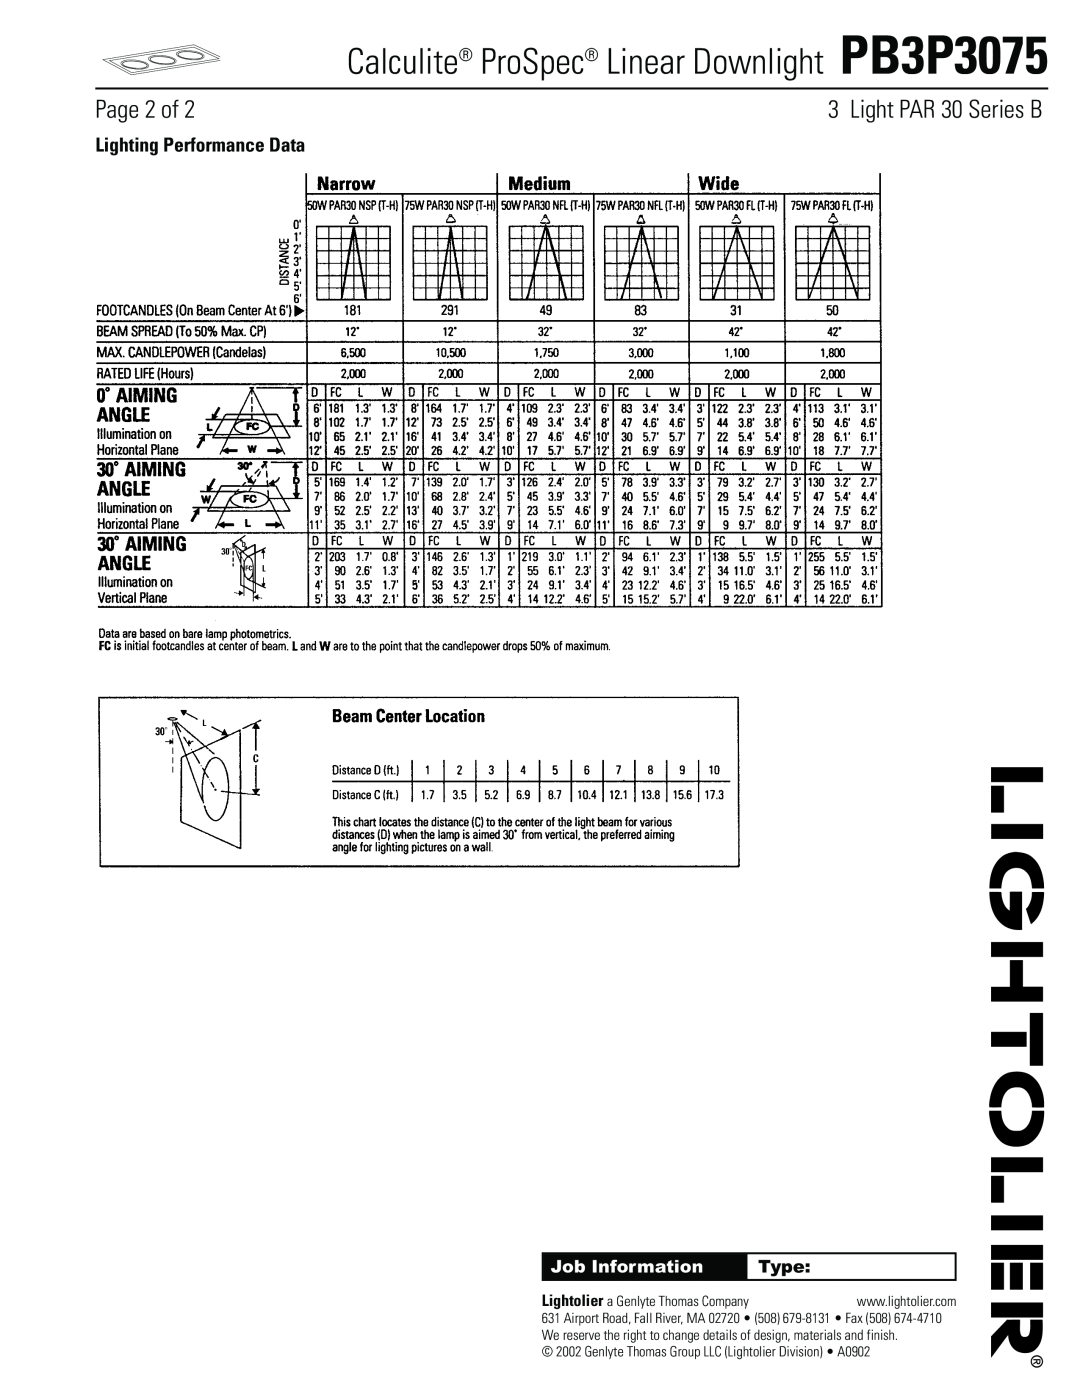 Lightolier Page 2 of, Lighting Performance Data, Calculite ProSpec Linear Downlight PB3P3075, Light PAR 30 Series B 